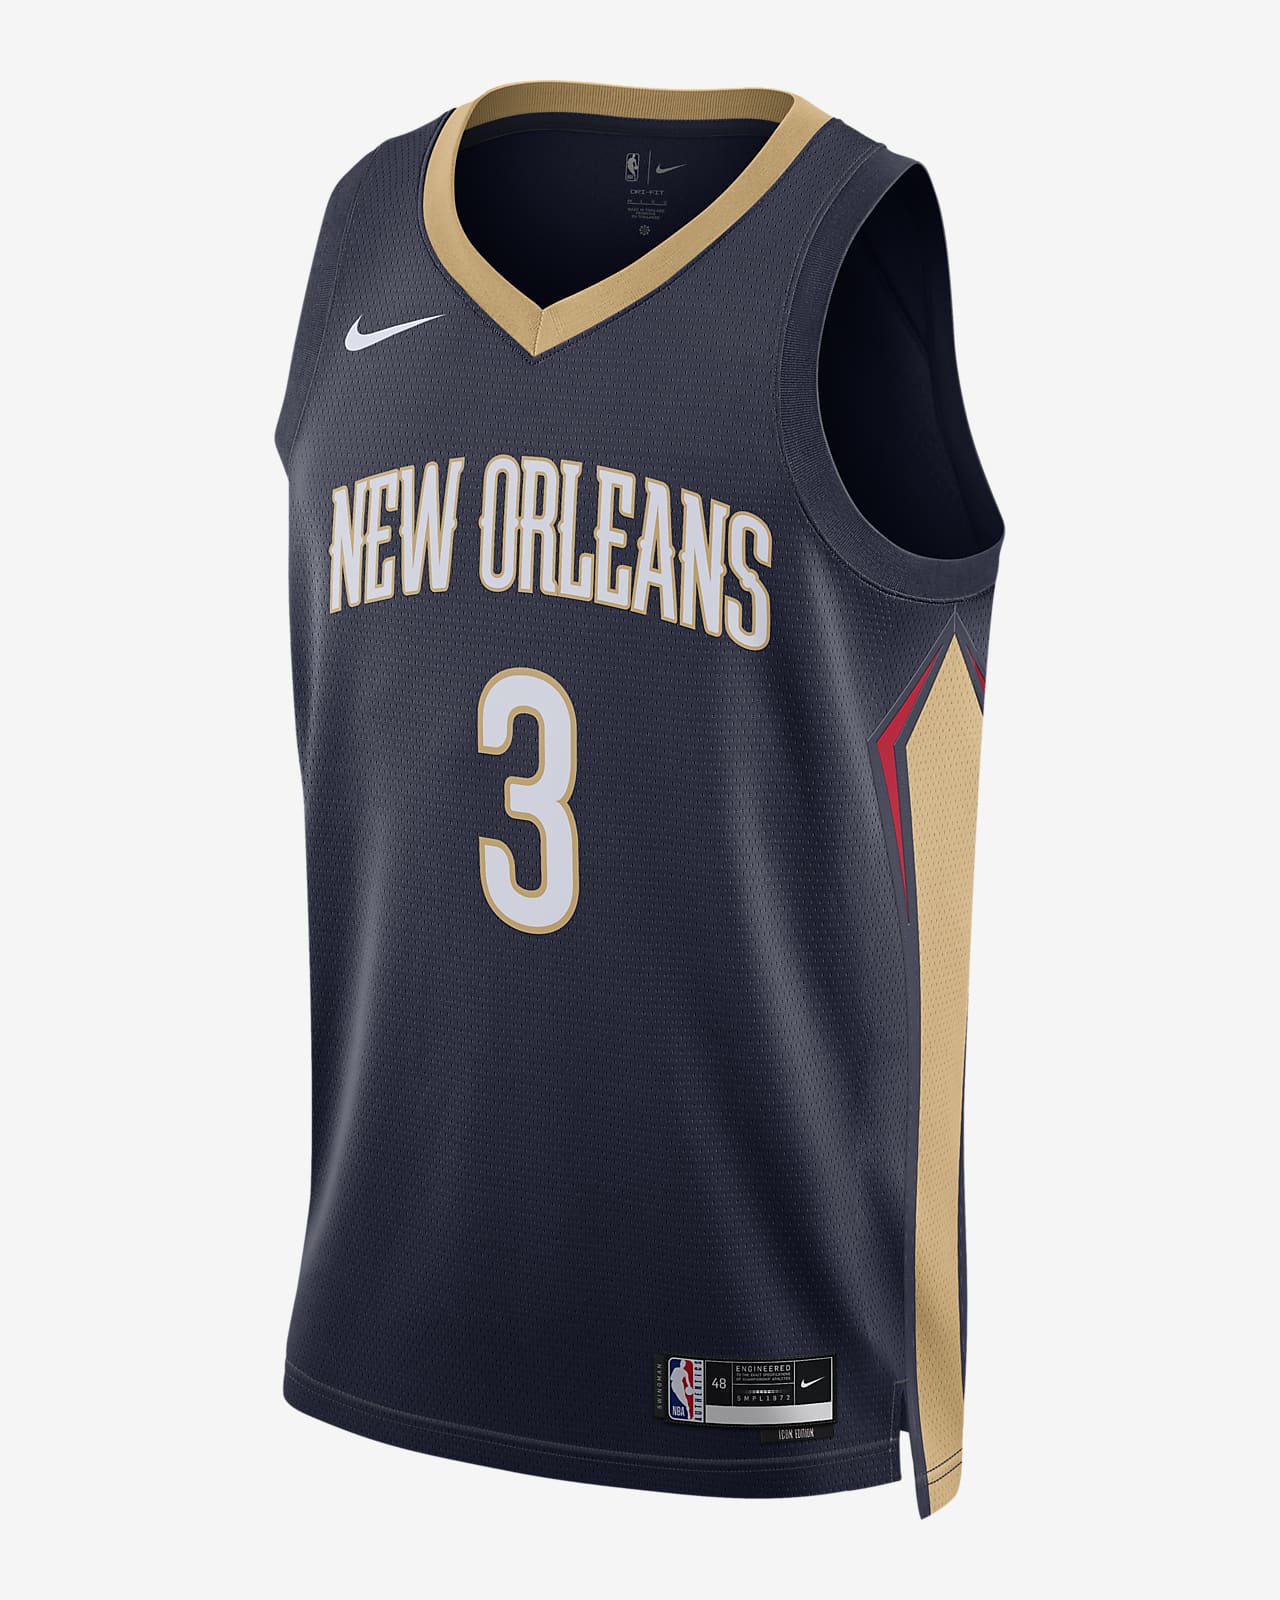 Nike Men's New Orleans Pelicans Brandon Ingram #14 Navy Dri-Fit Swingman Jersey, Medium, Blue